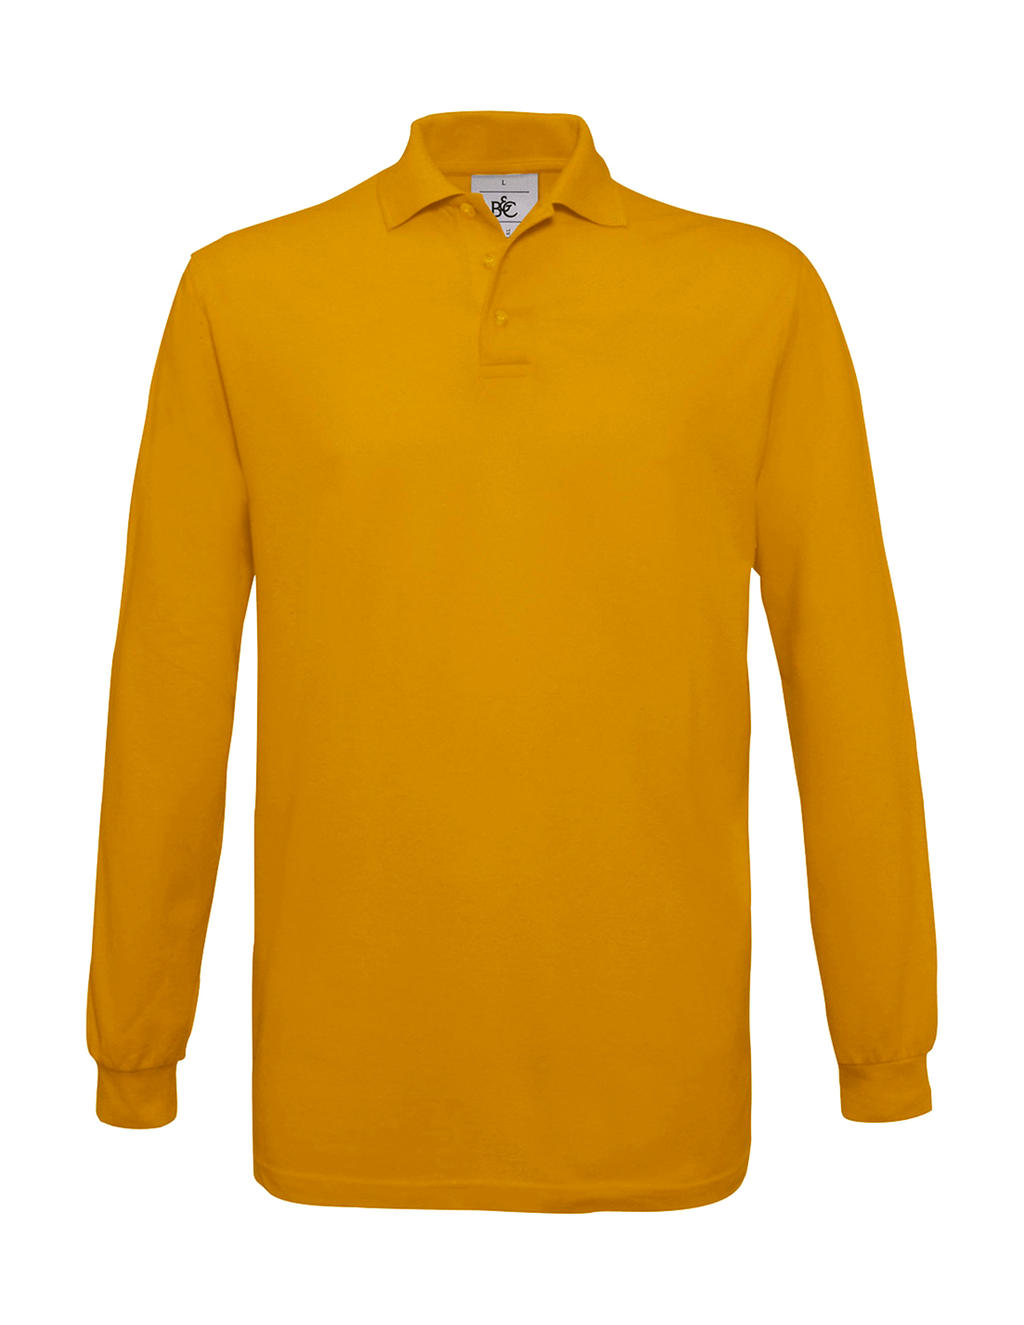 Pánské polo tričko B&C Safran s dlouhým rukávem - žluté, XL